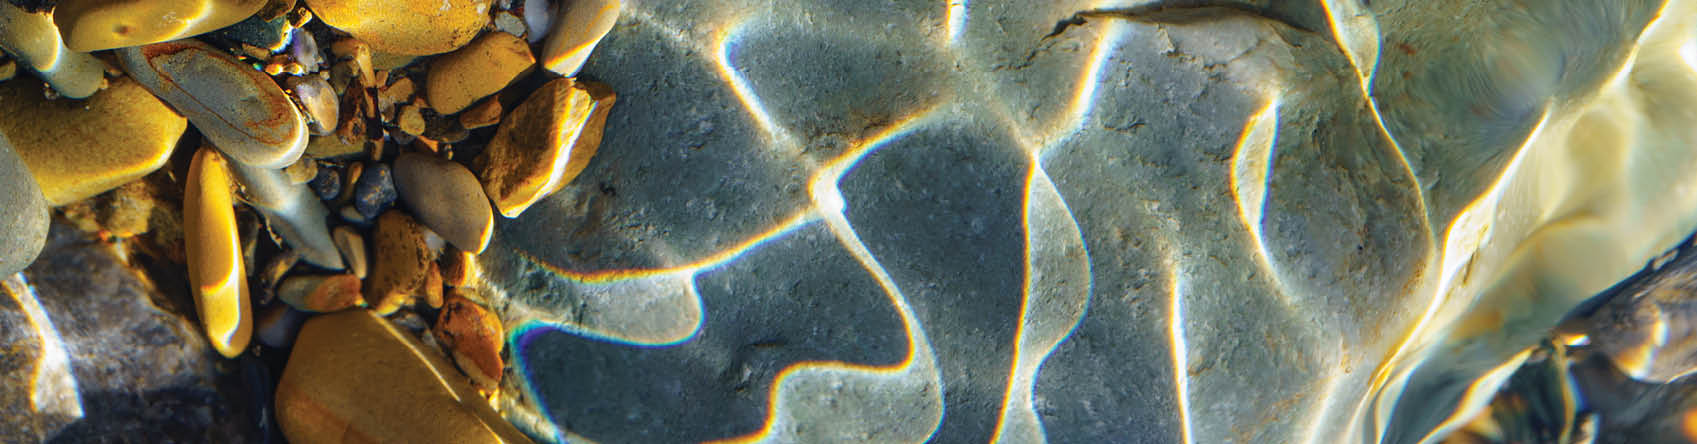 a photo of stones below water